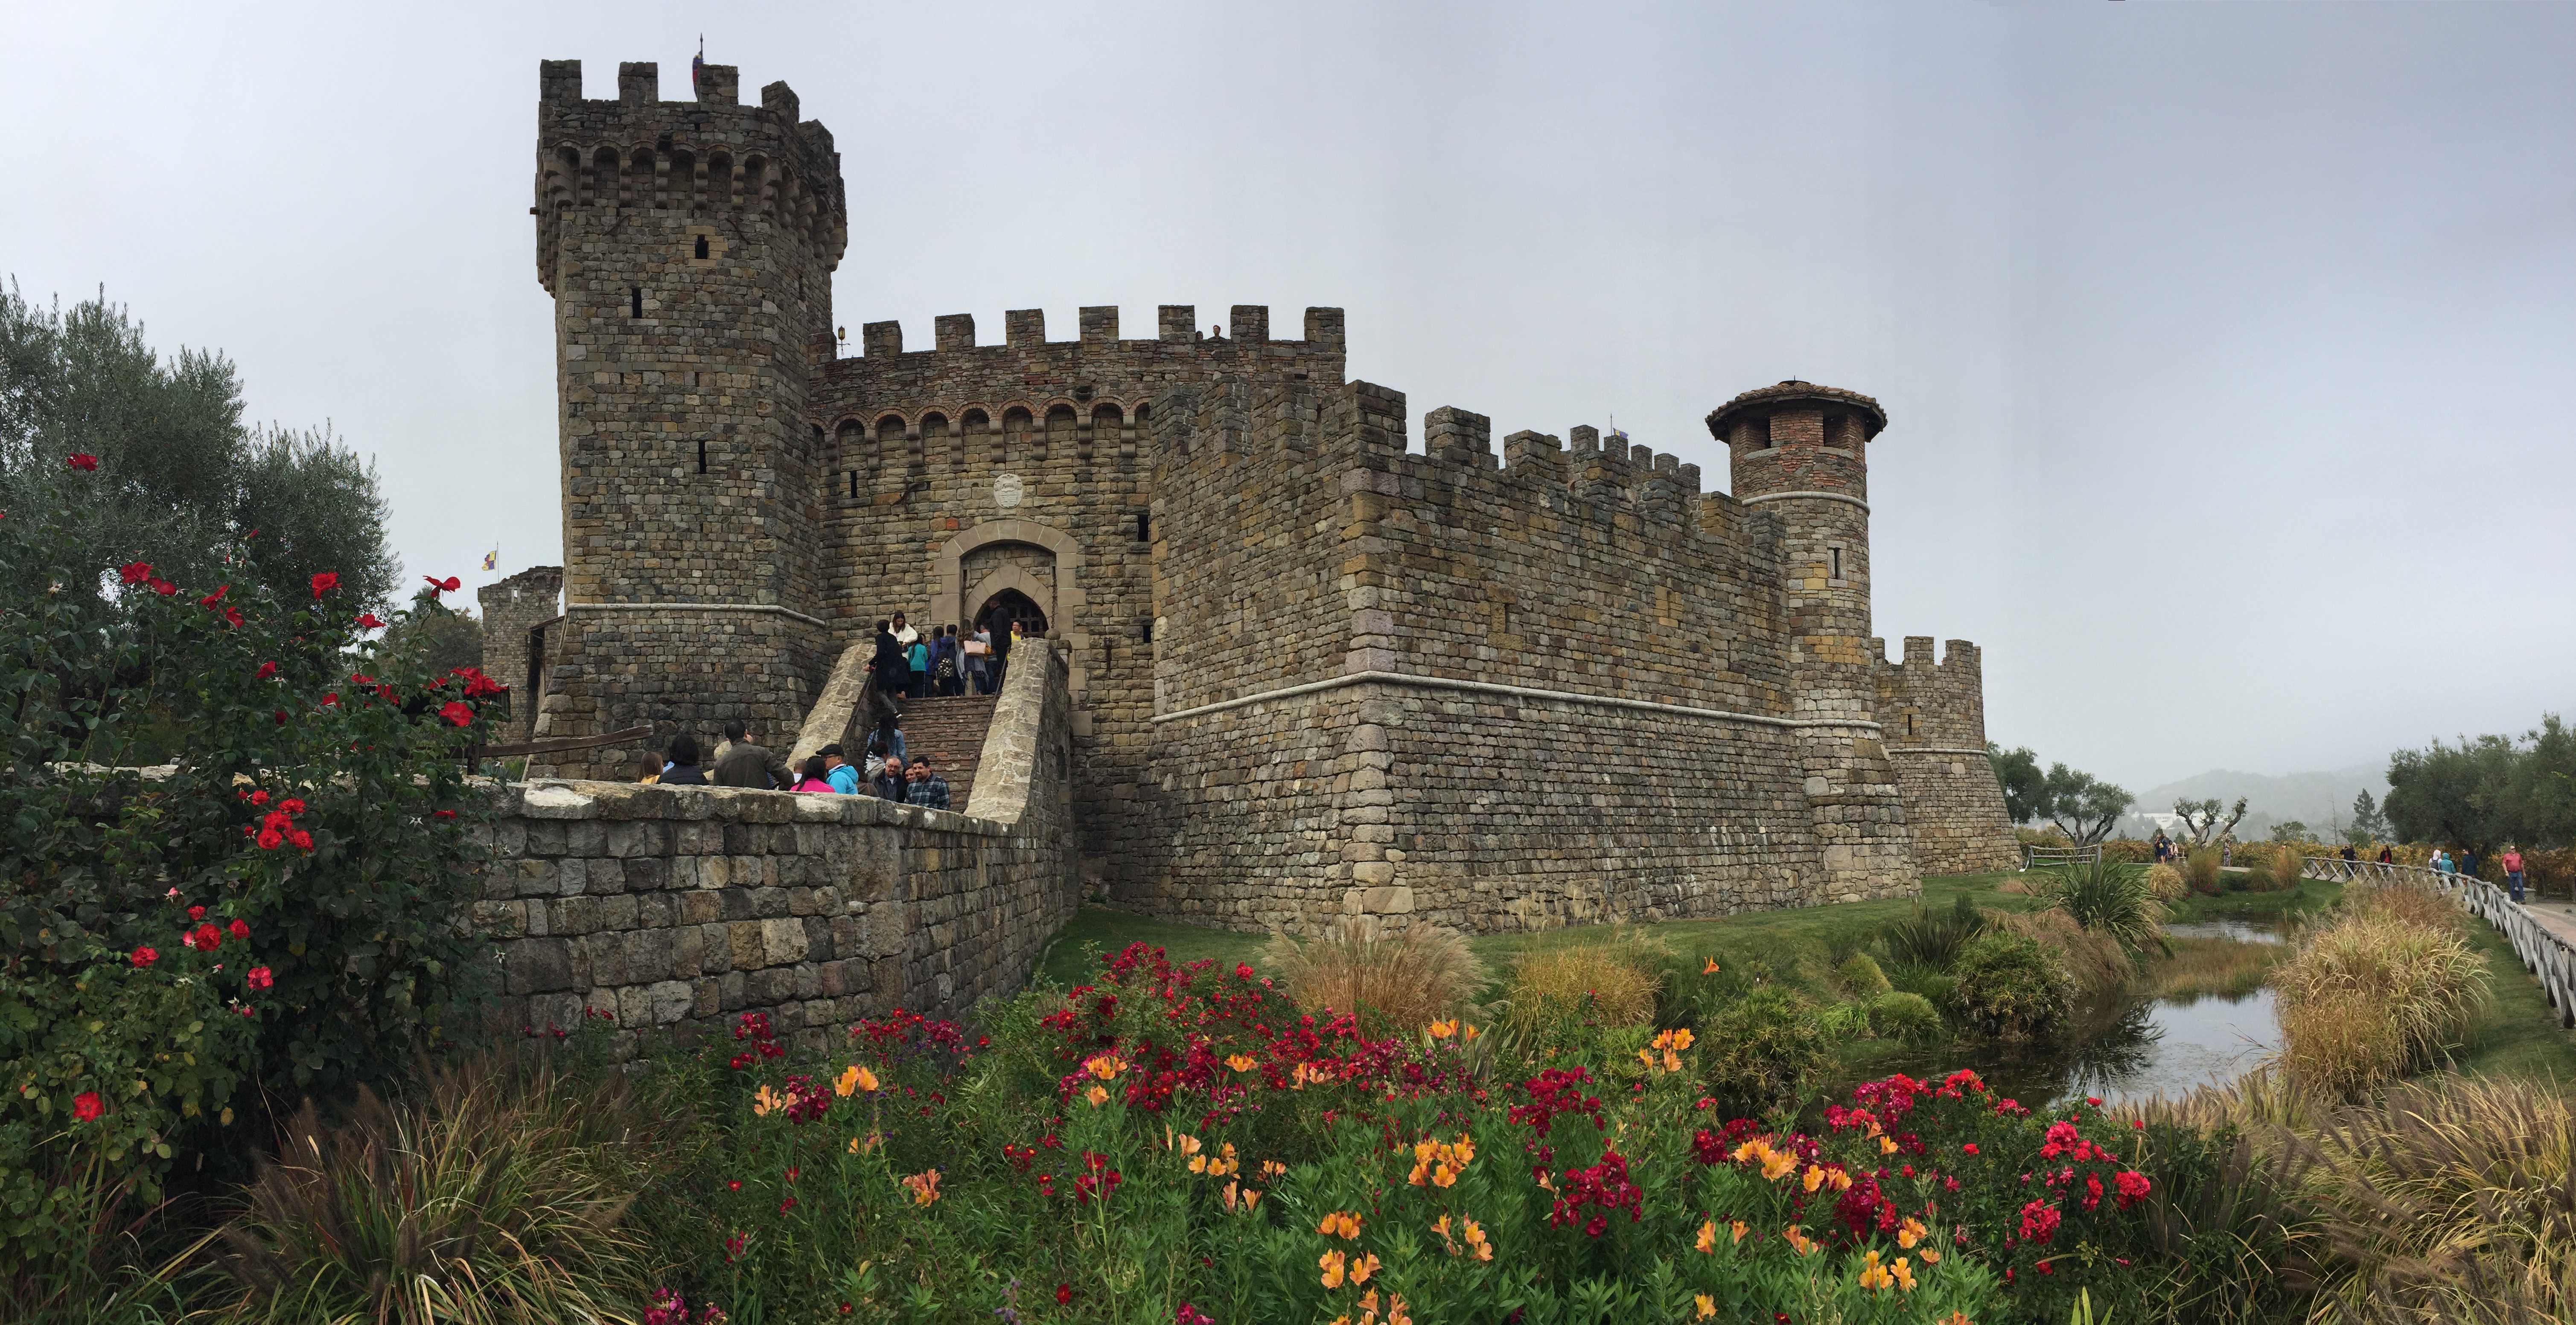 [Trip] Napa Valleyを行く –  Castello di Amorosaは、城造りワイナリー [2020/04/13] ID13395